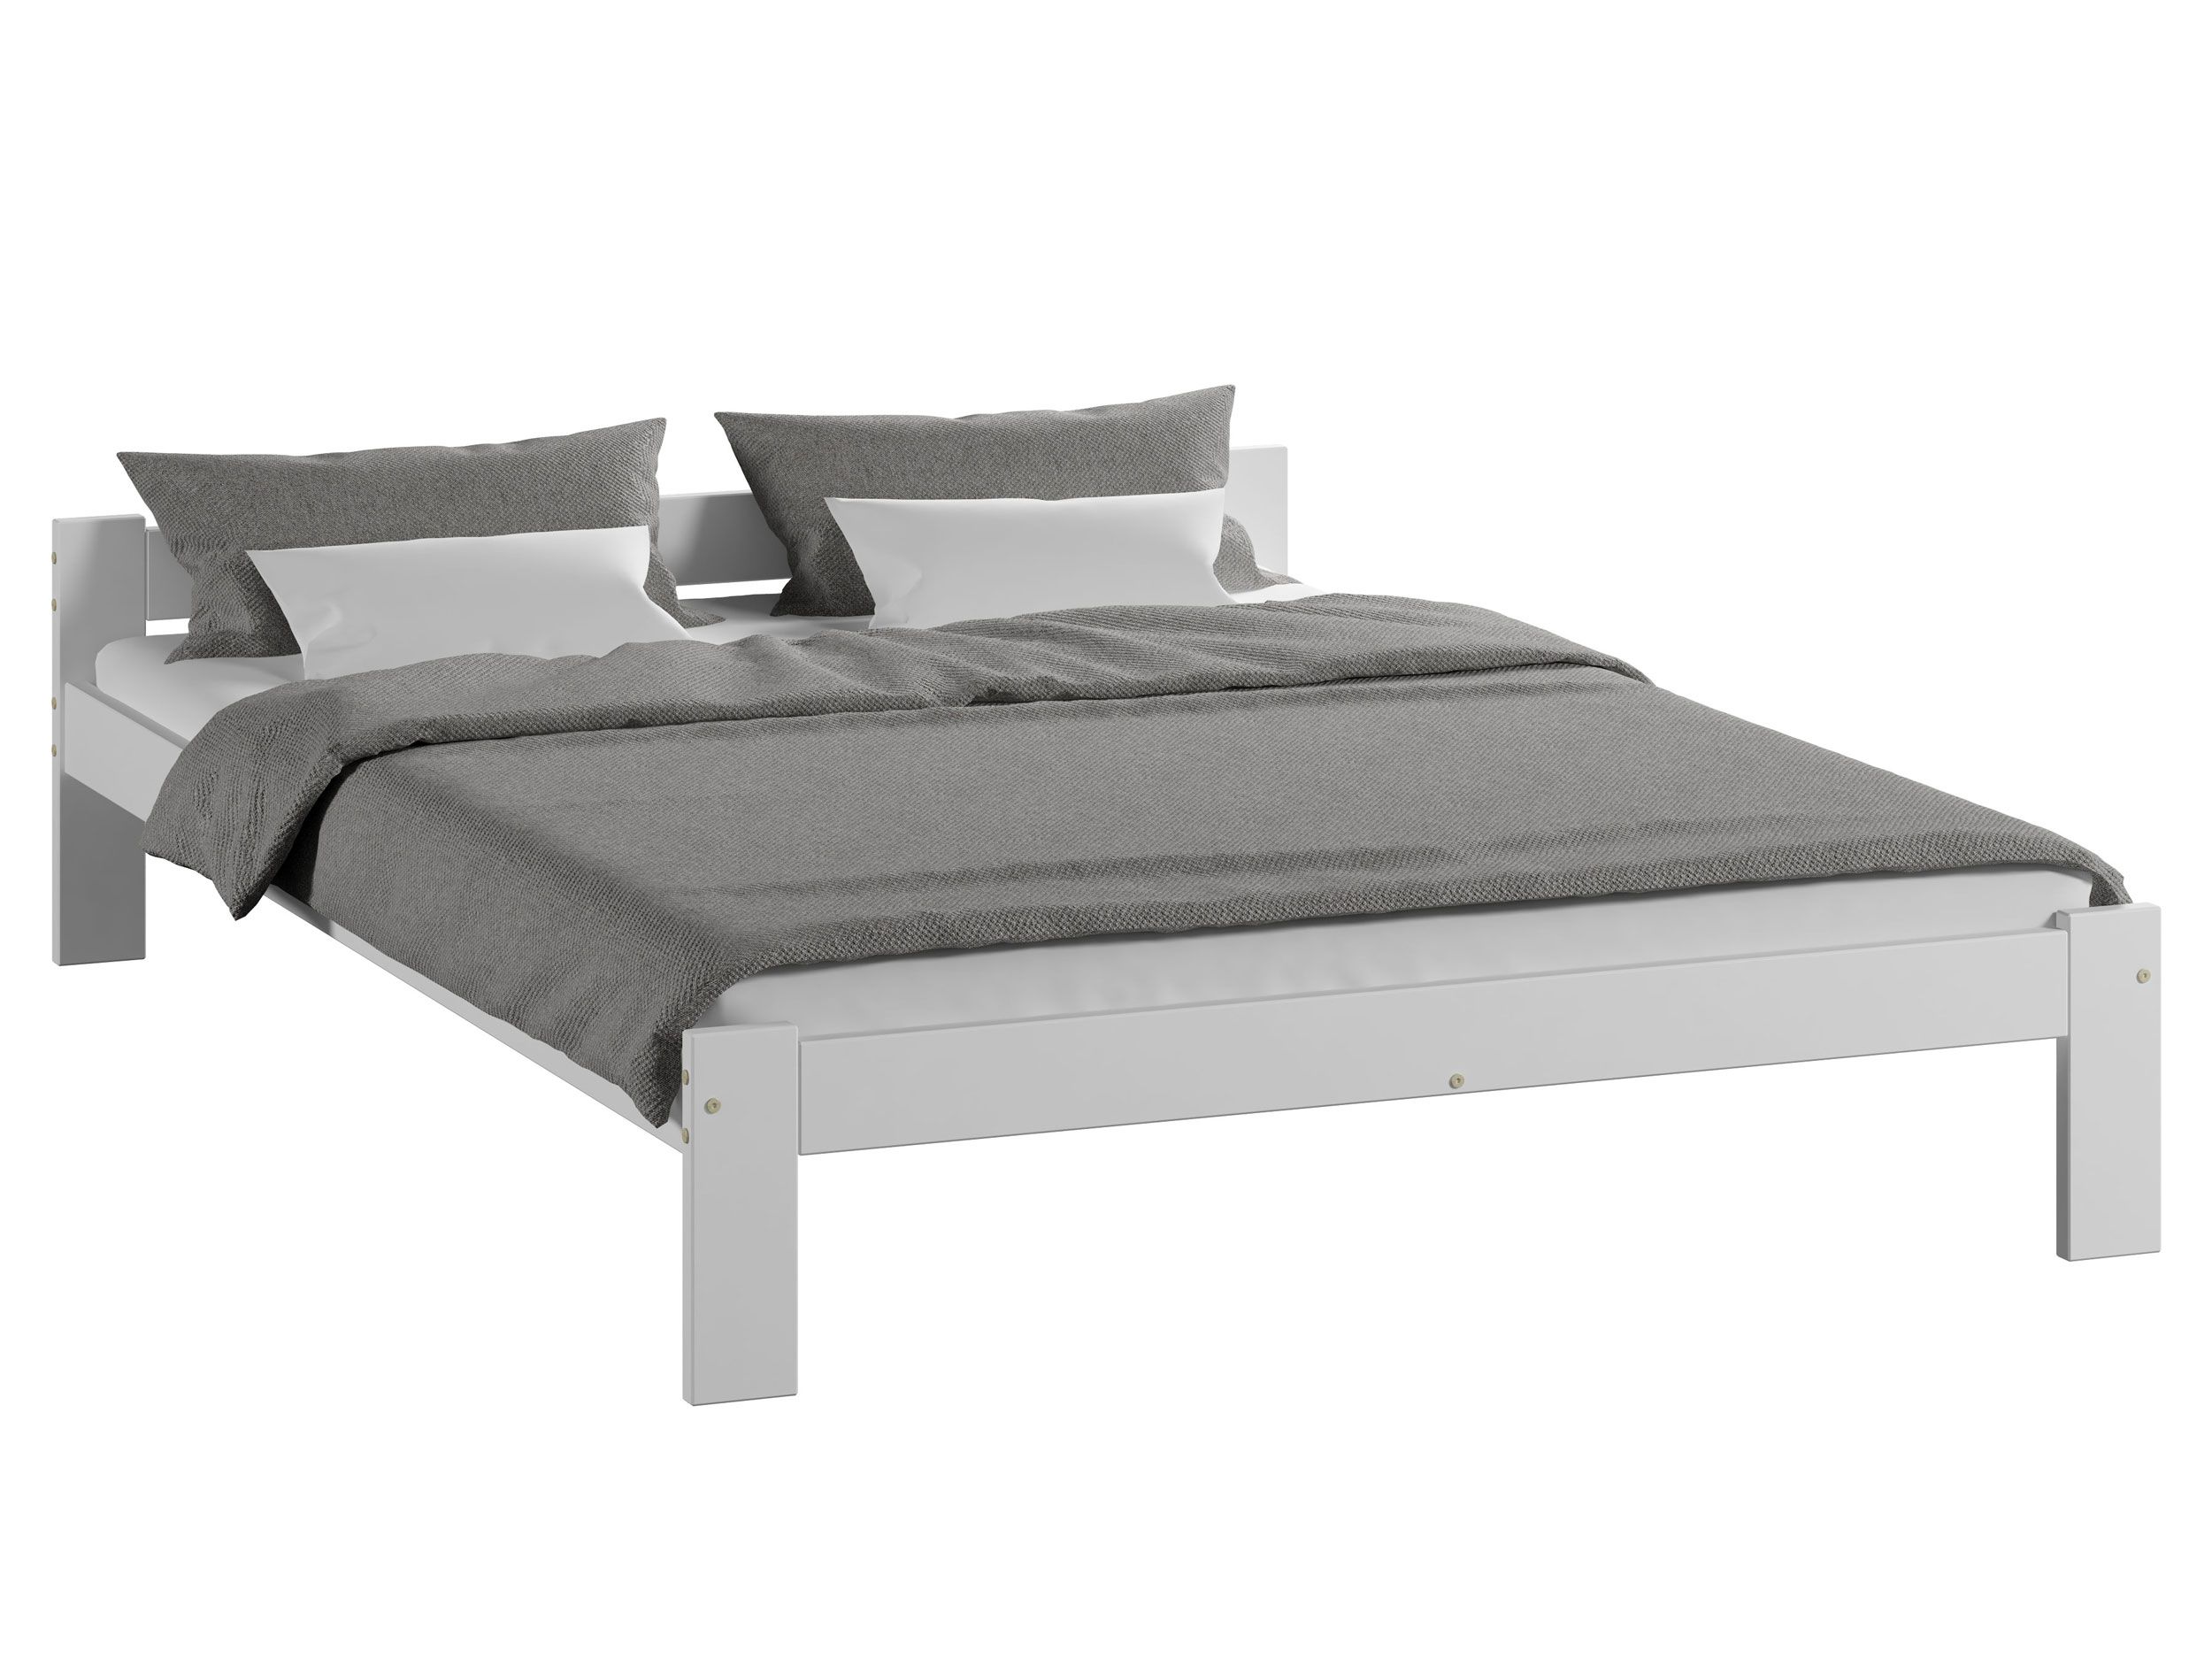 Jugendbett im schlichten Design Ansalonga 17, Kiefer Vollholz massiv, Farbe: Weiß - Liegefläche: 140 x 200 cm (B x L)